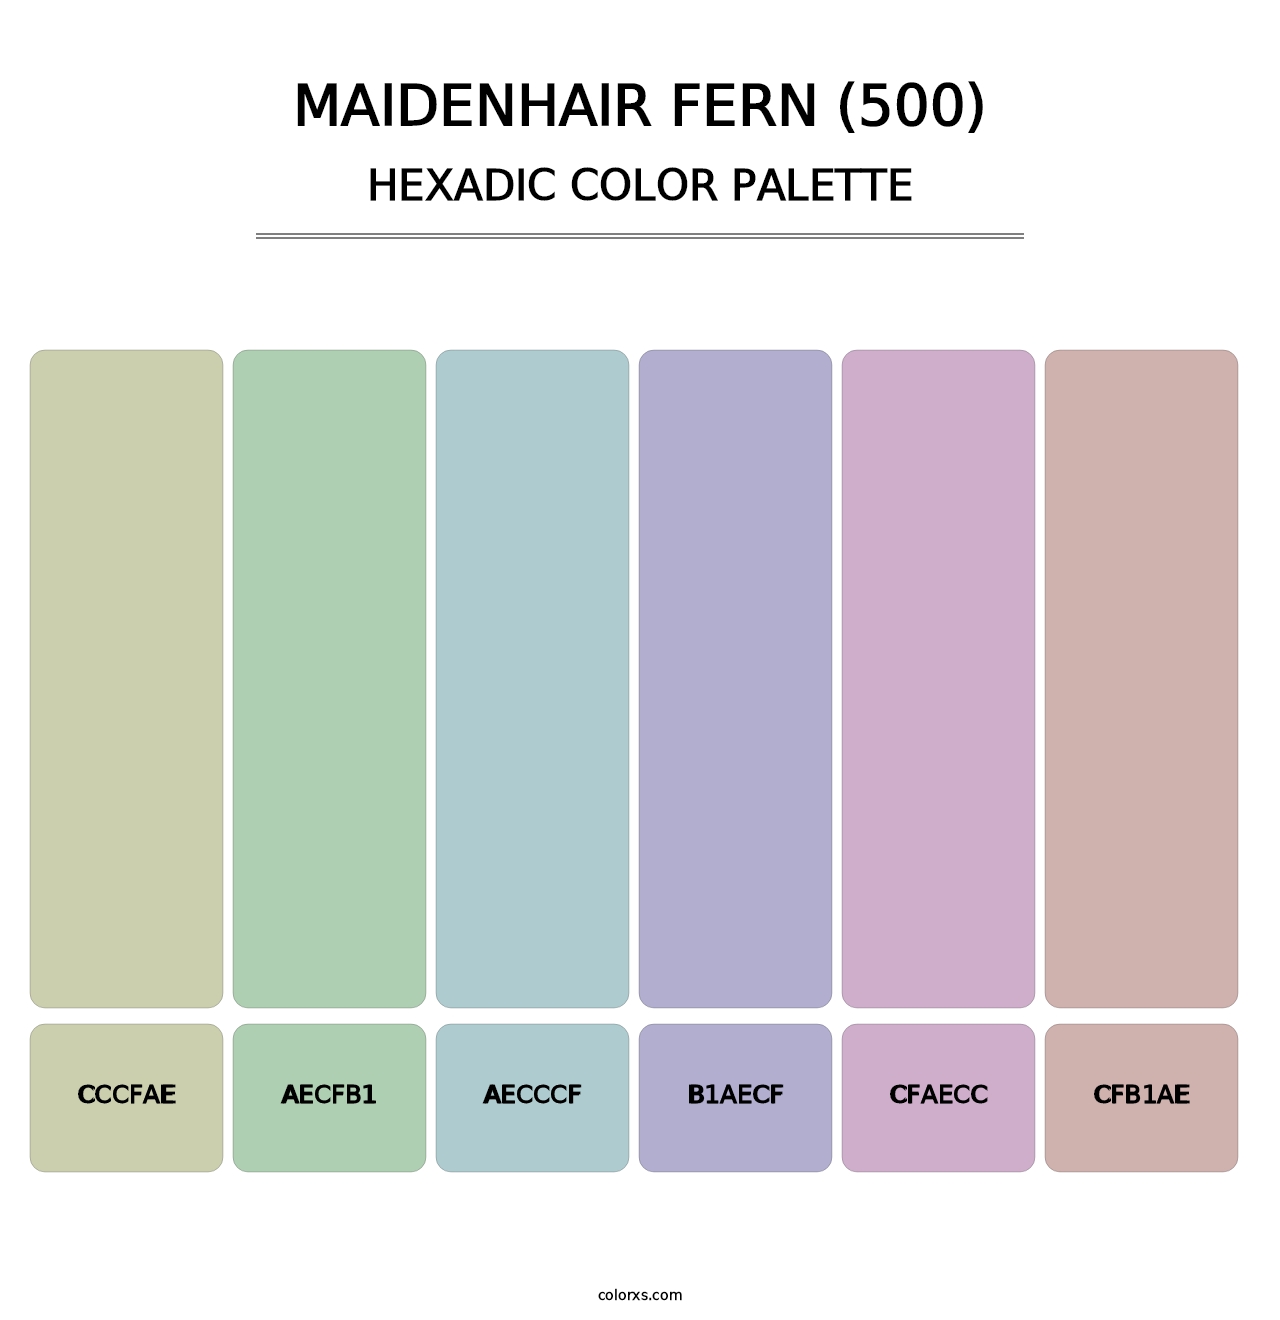 Maidenhair Fern (500) - Hexadic Color Palette